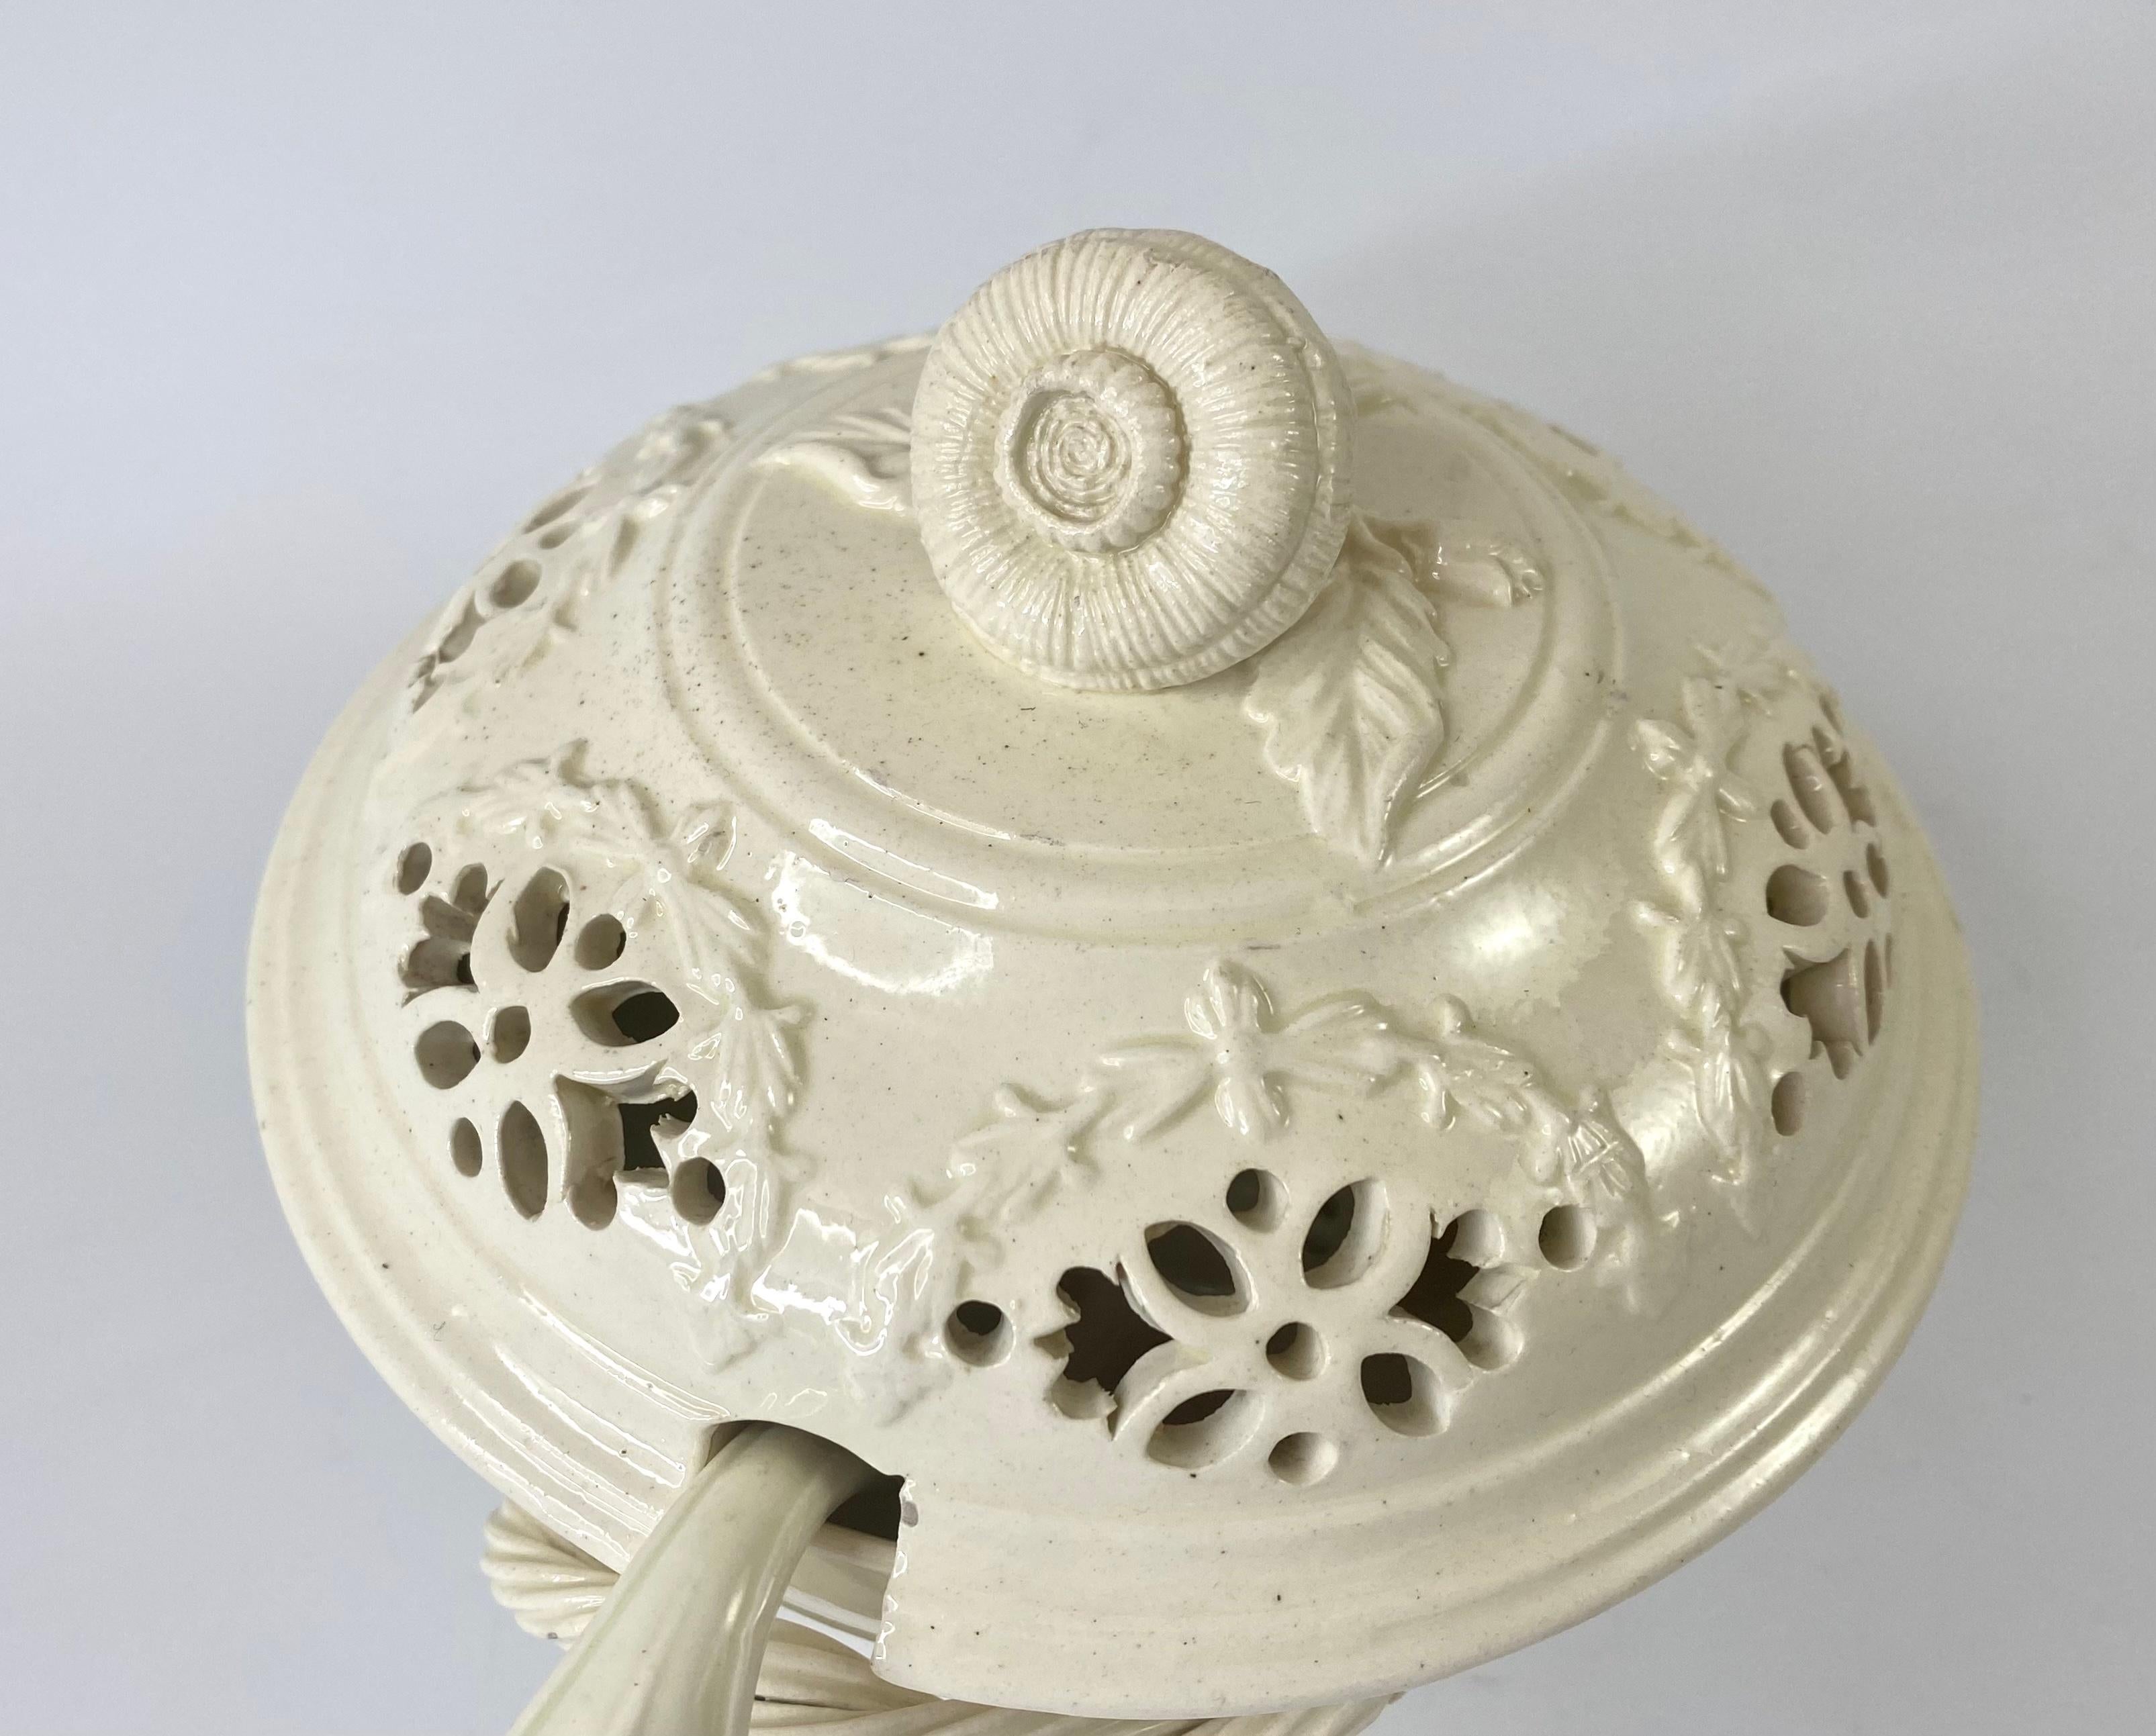 Georgian English Creamware Tureen, Cover, Ladle and Stand, C. 1790